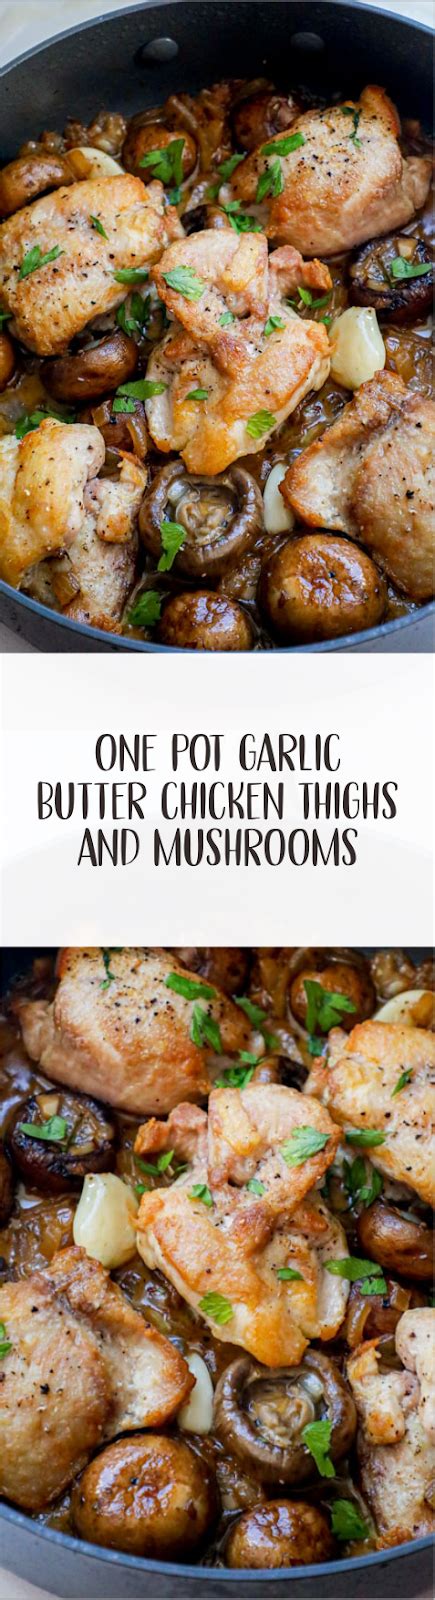 One Pot Garlic Butter Chicken Thighs And Mushrooms Dinner Recipe